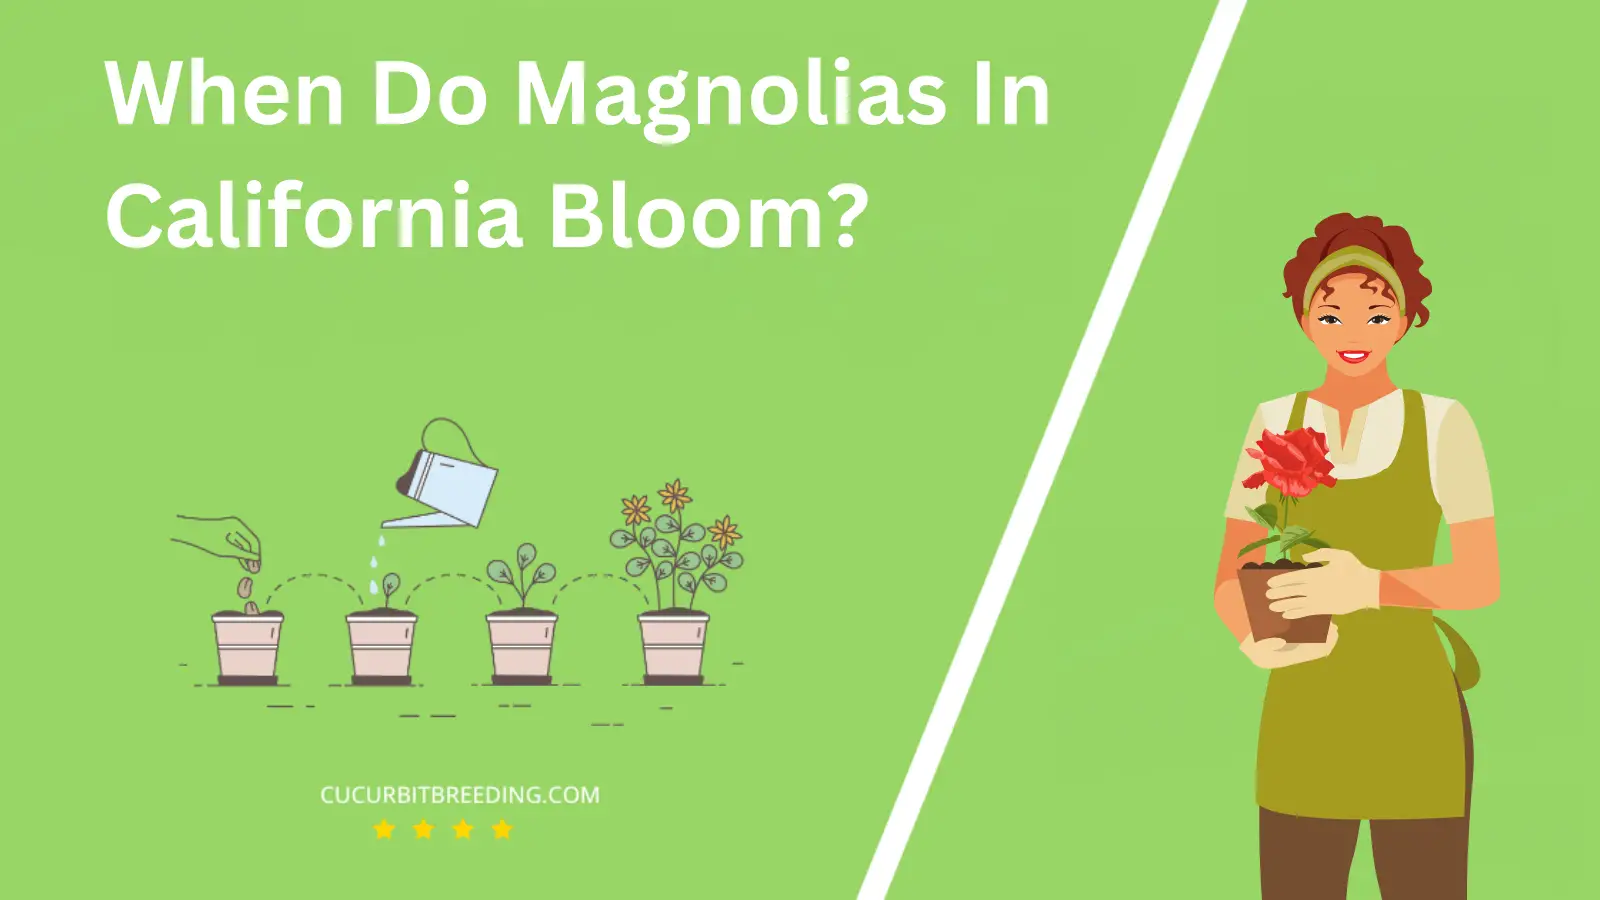 When Do Magnolias In California Bloom?